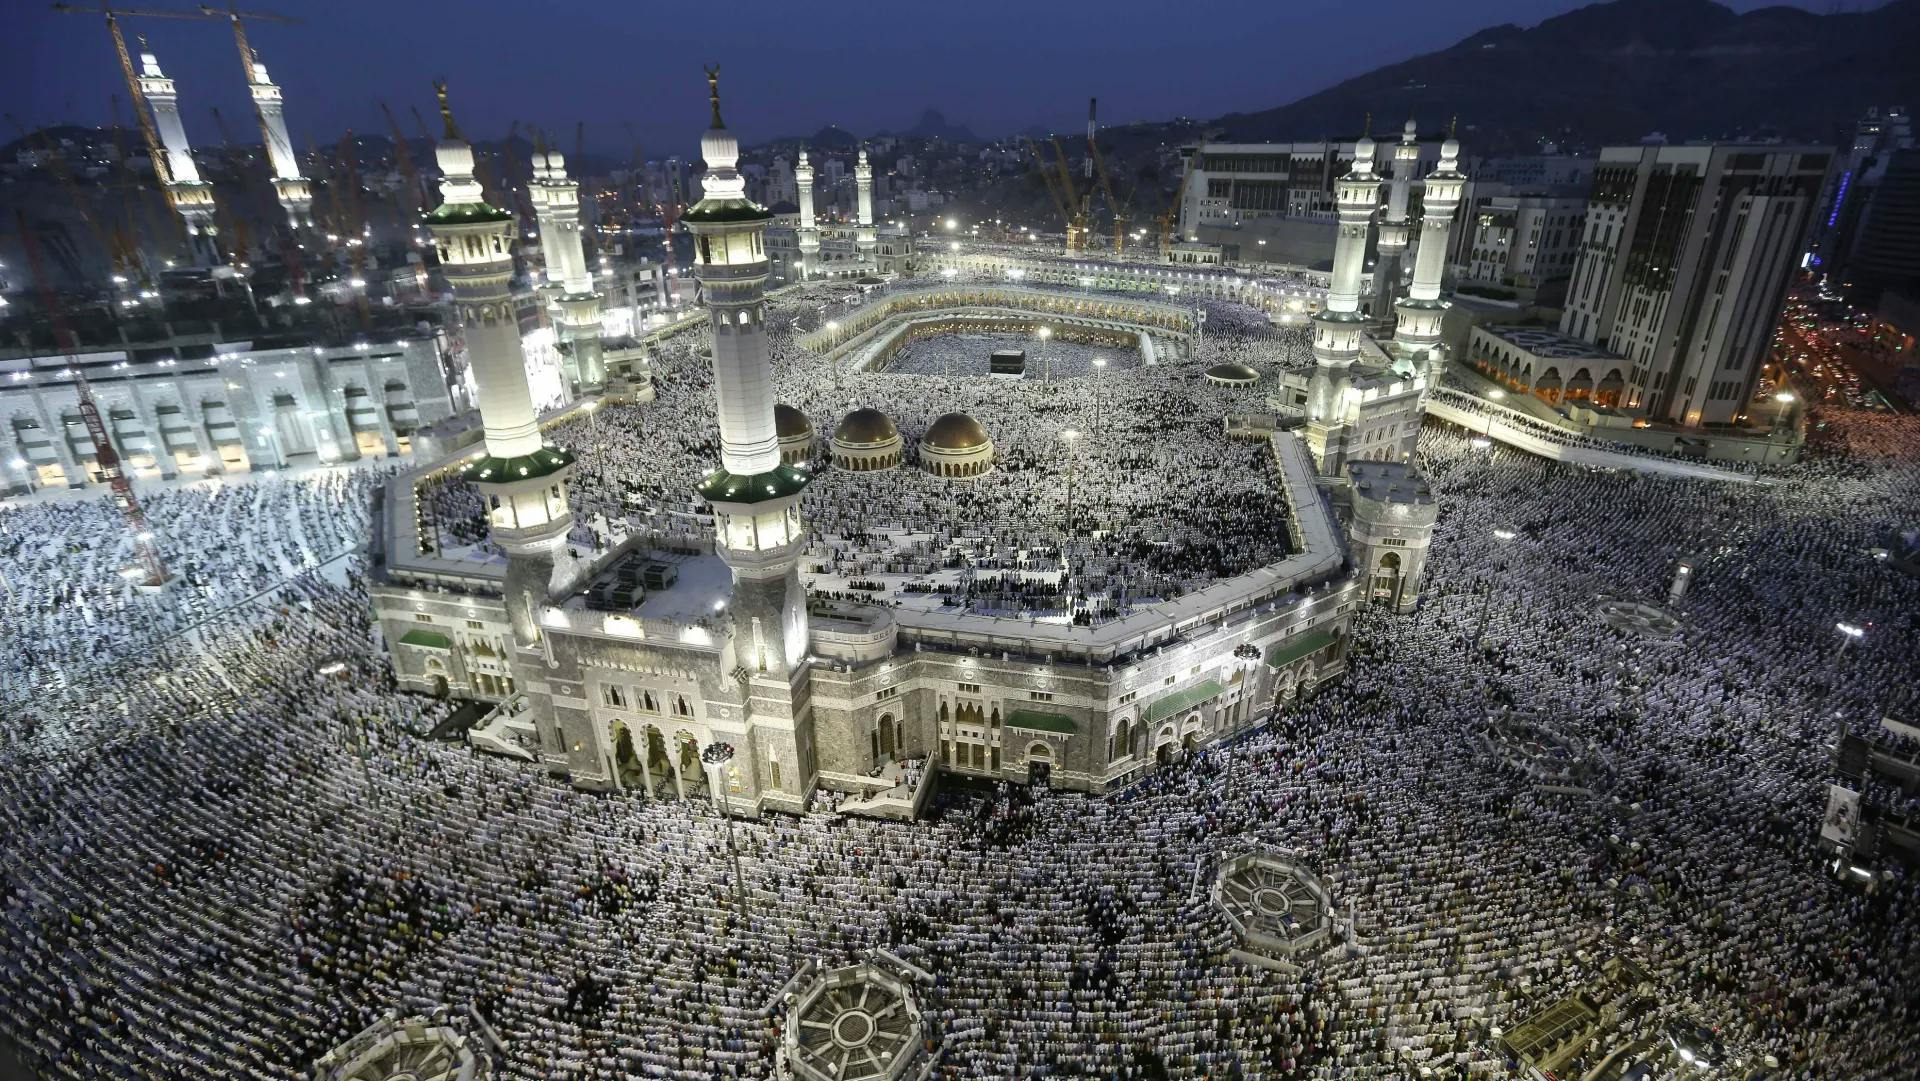 Image of Mecca